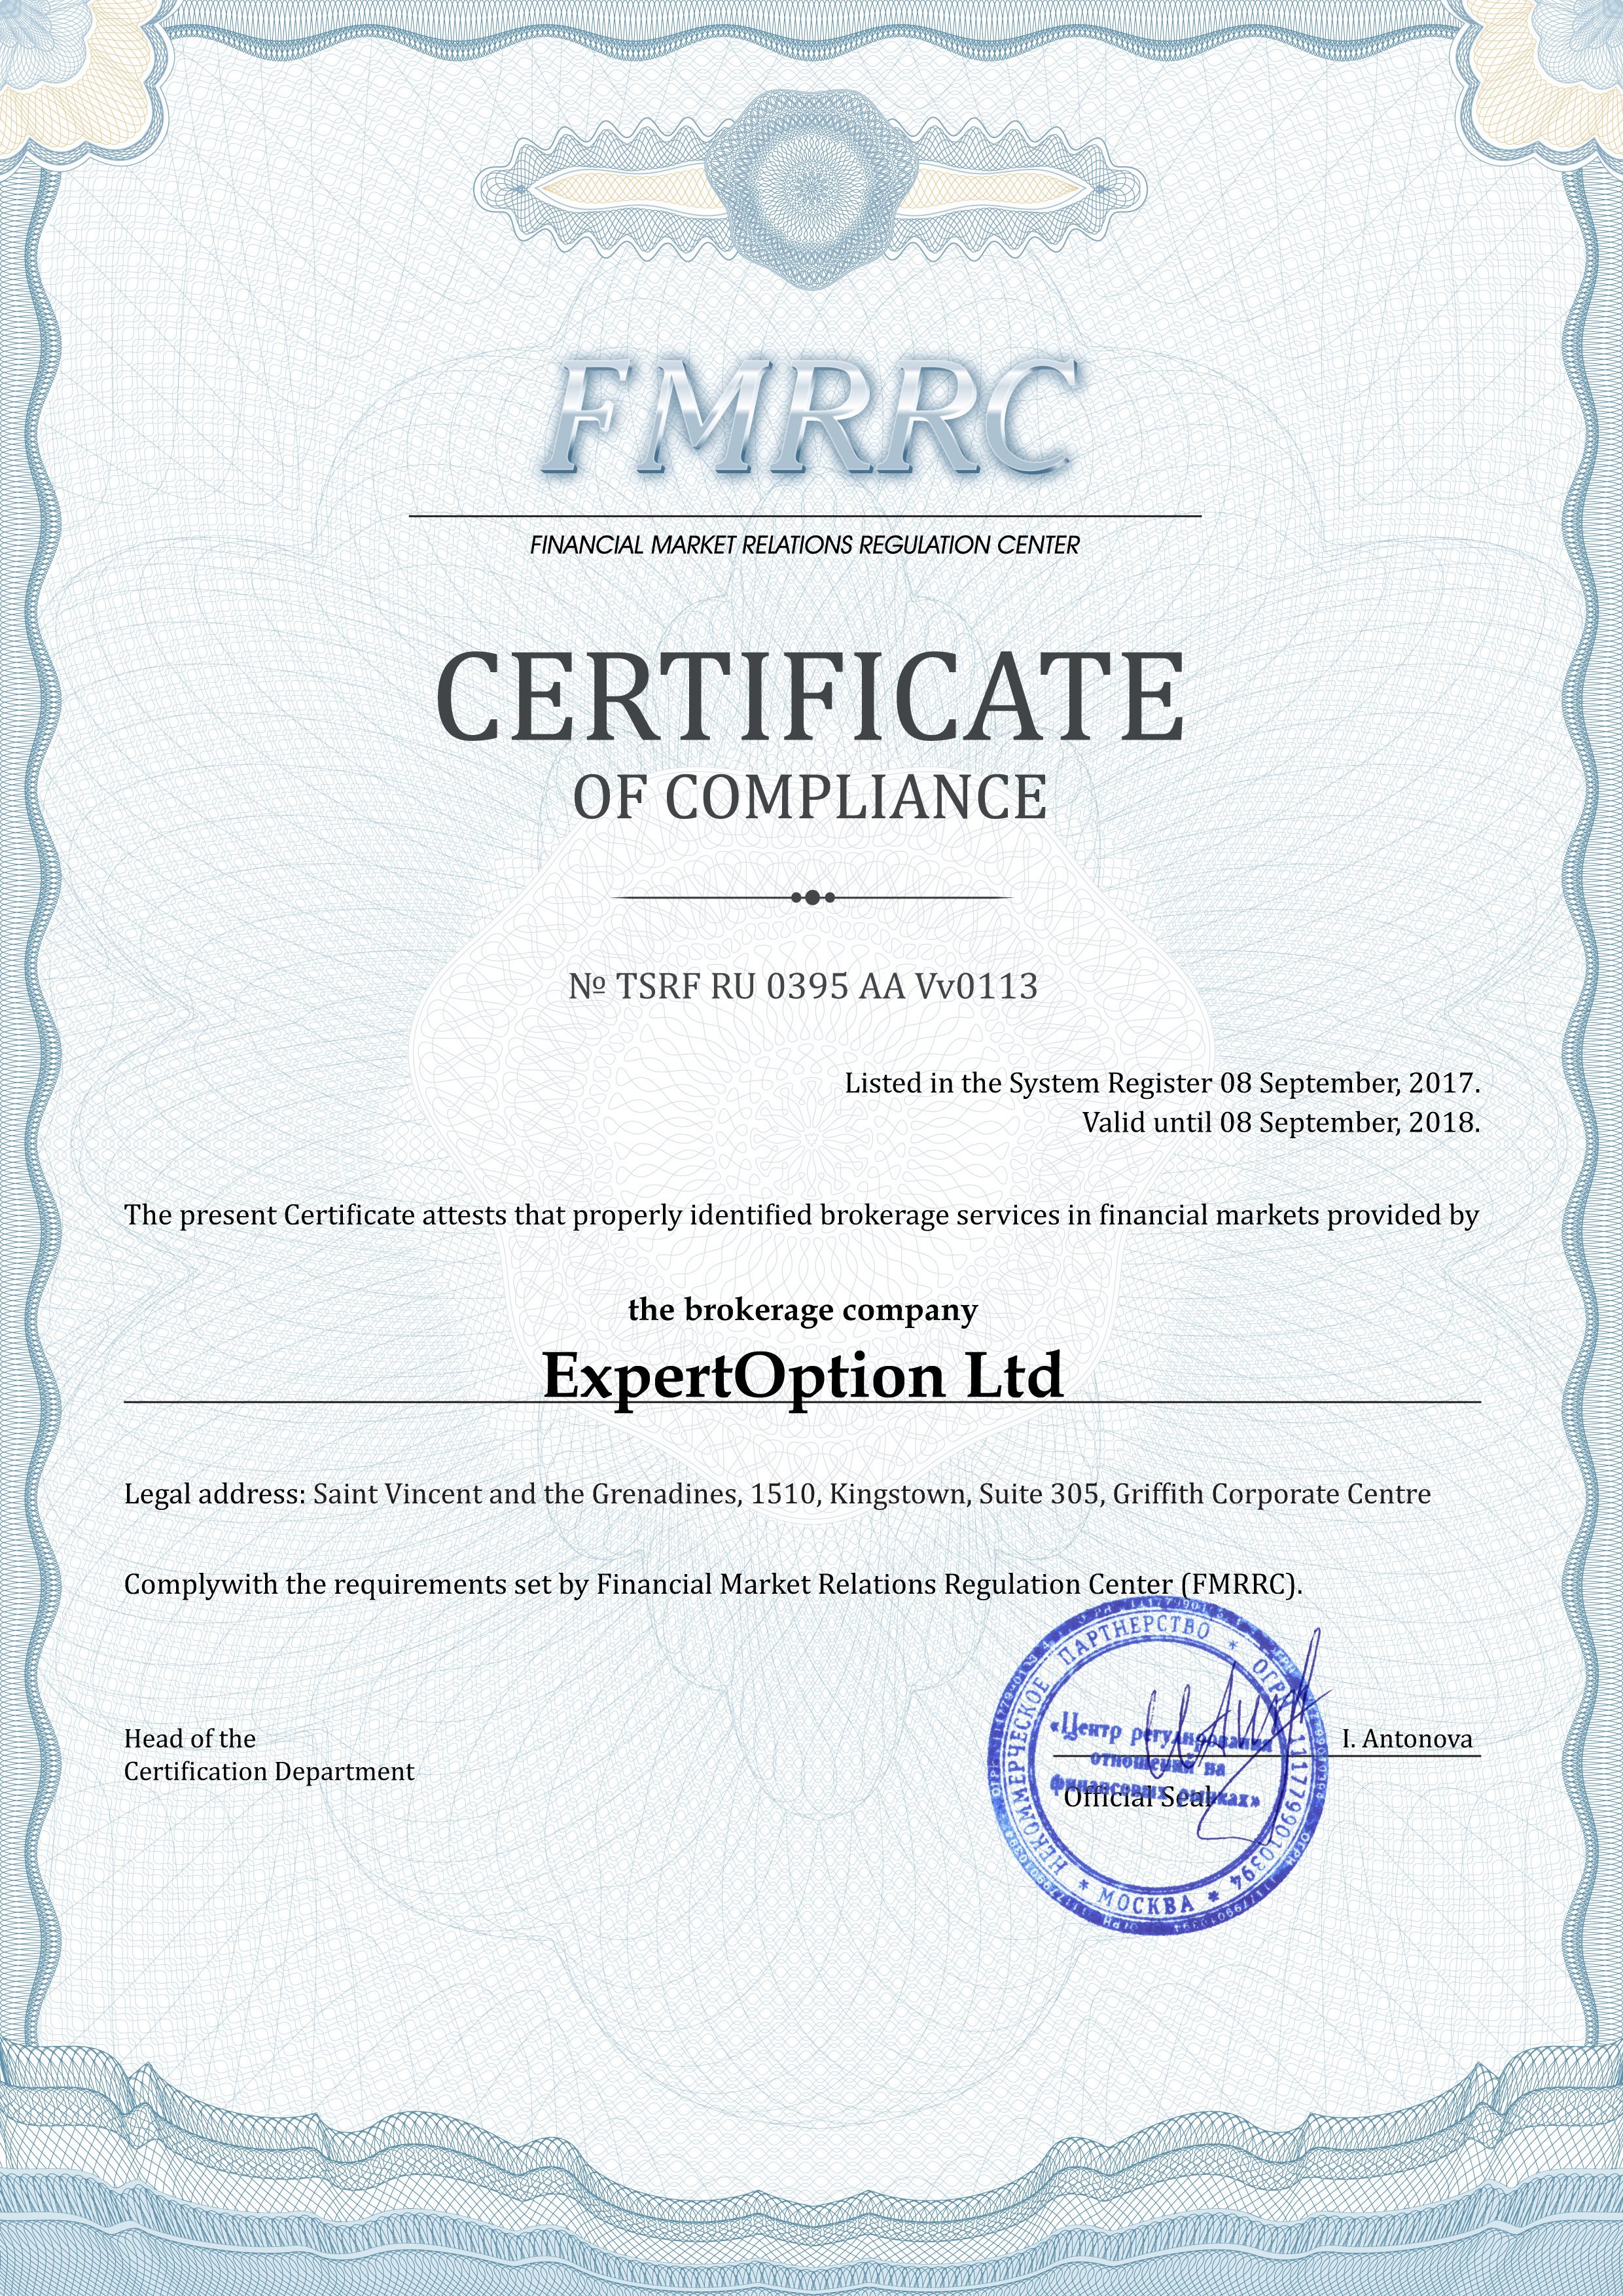 ExpertOption Ltd company Certificate of compliance